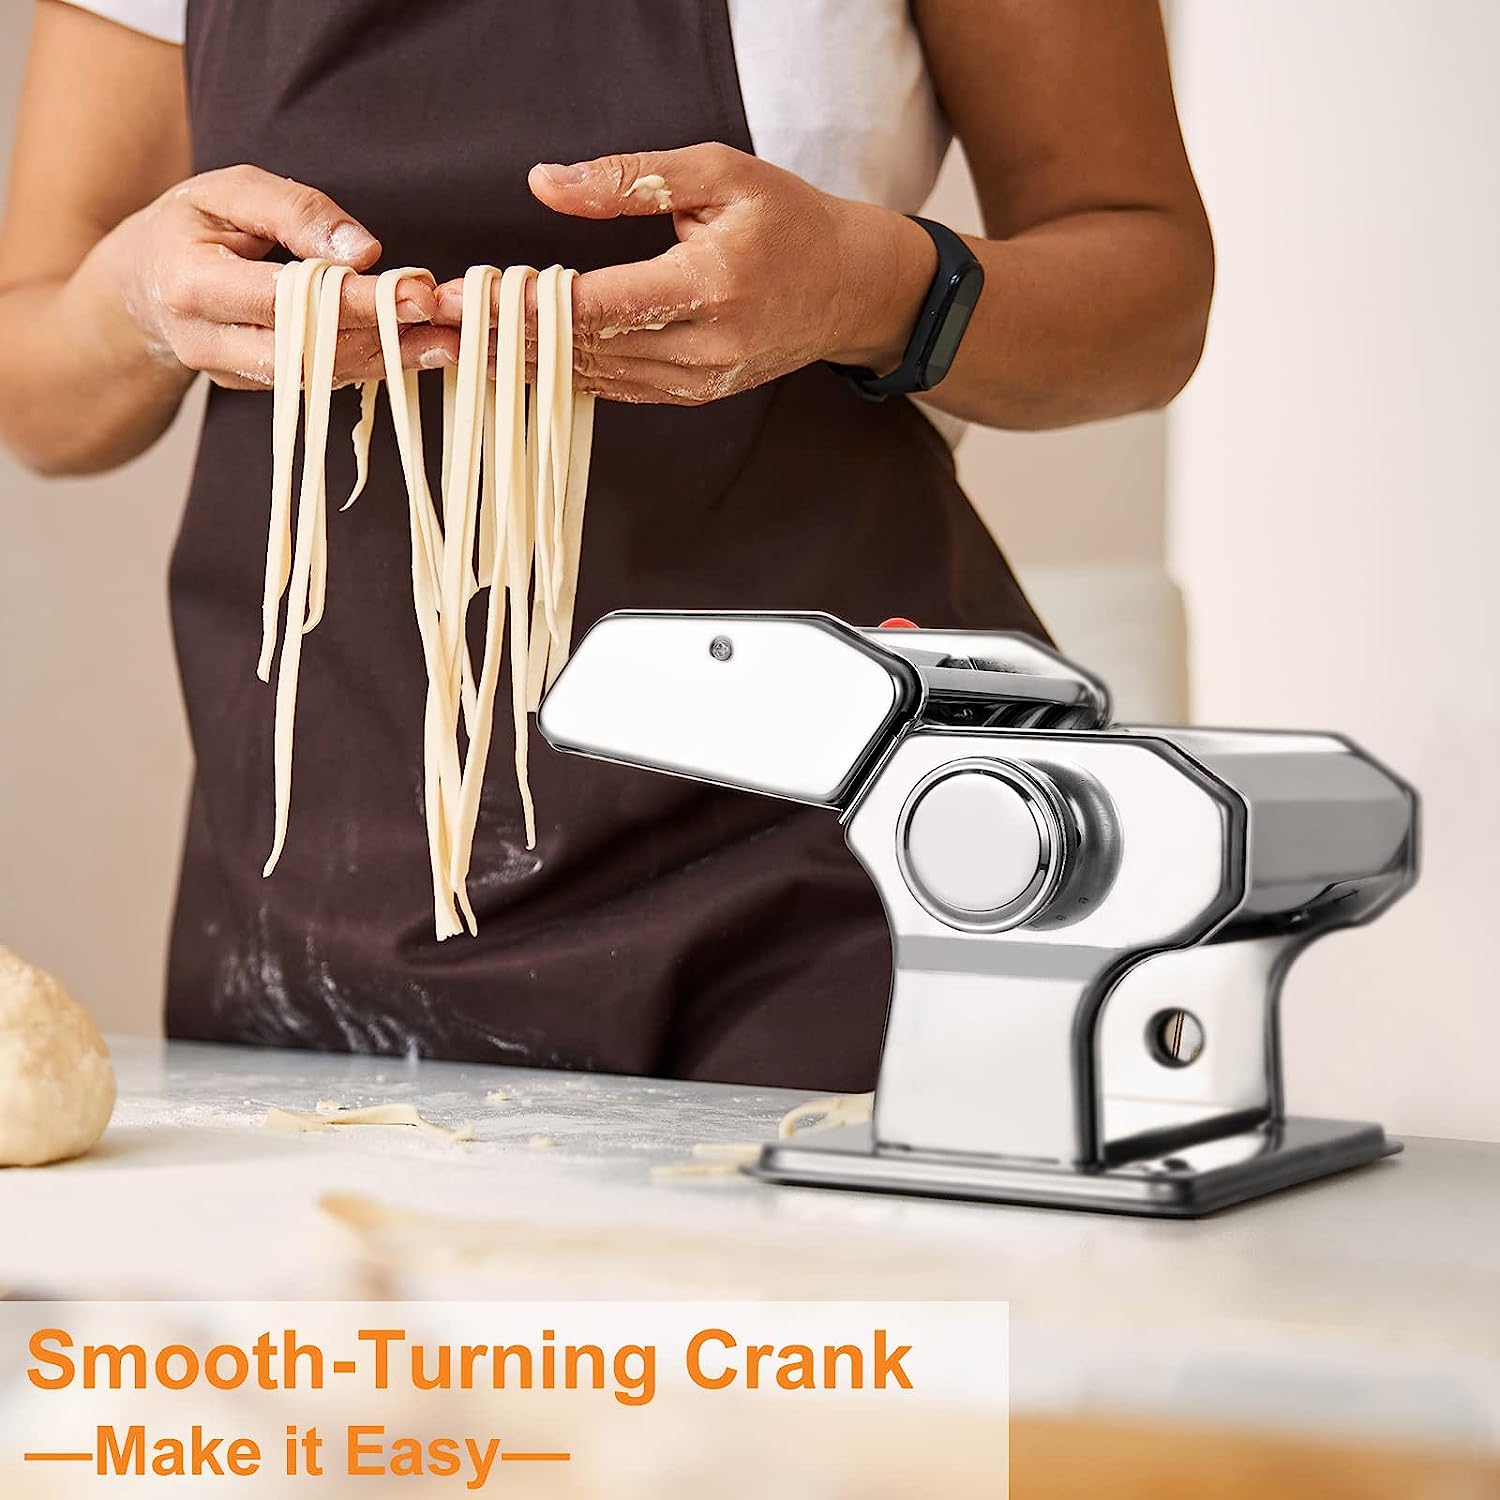 Pasta Maker Machine 9 Adjustable Thickness Settings Pasta Roller